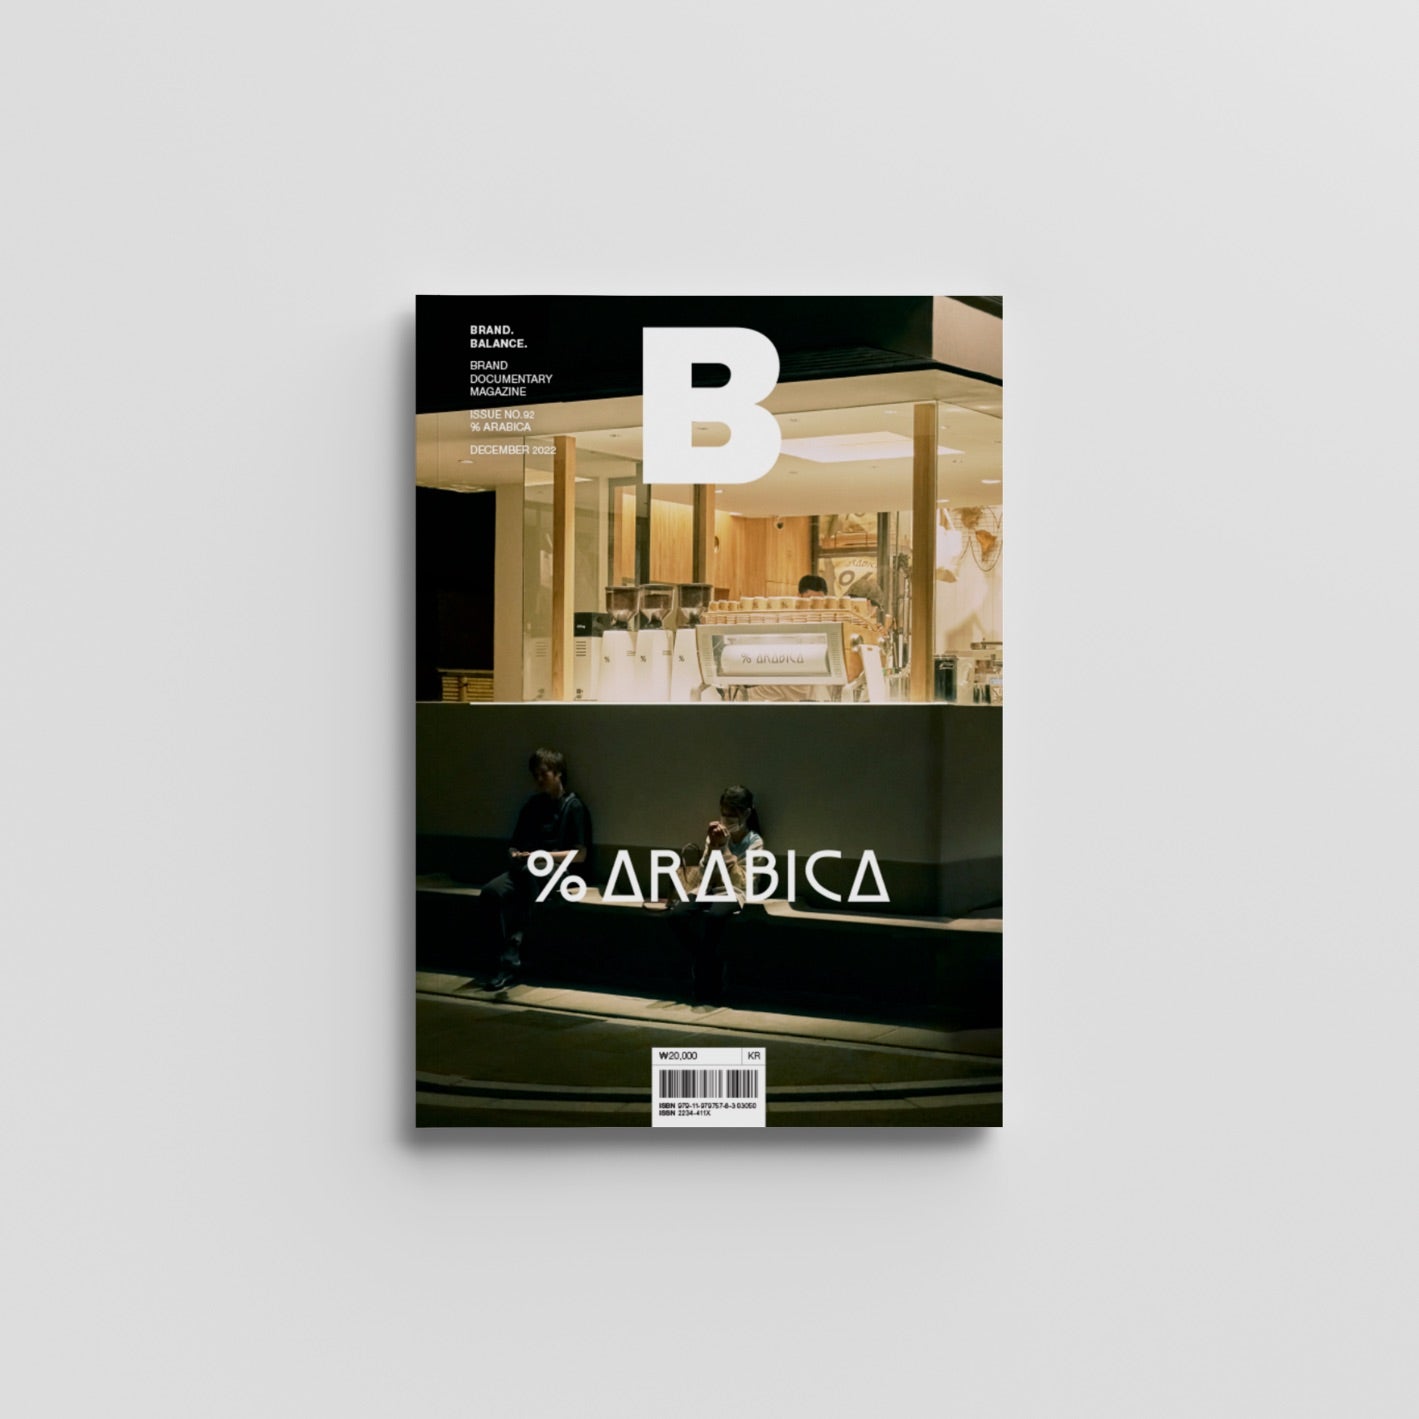 Magazine B Issue-92 ARABICA